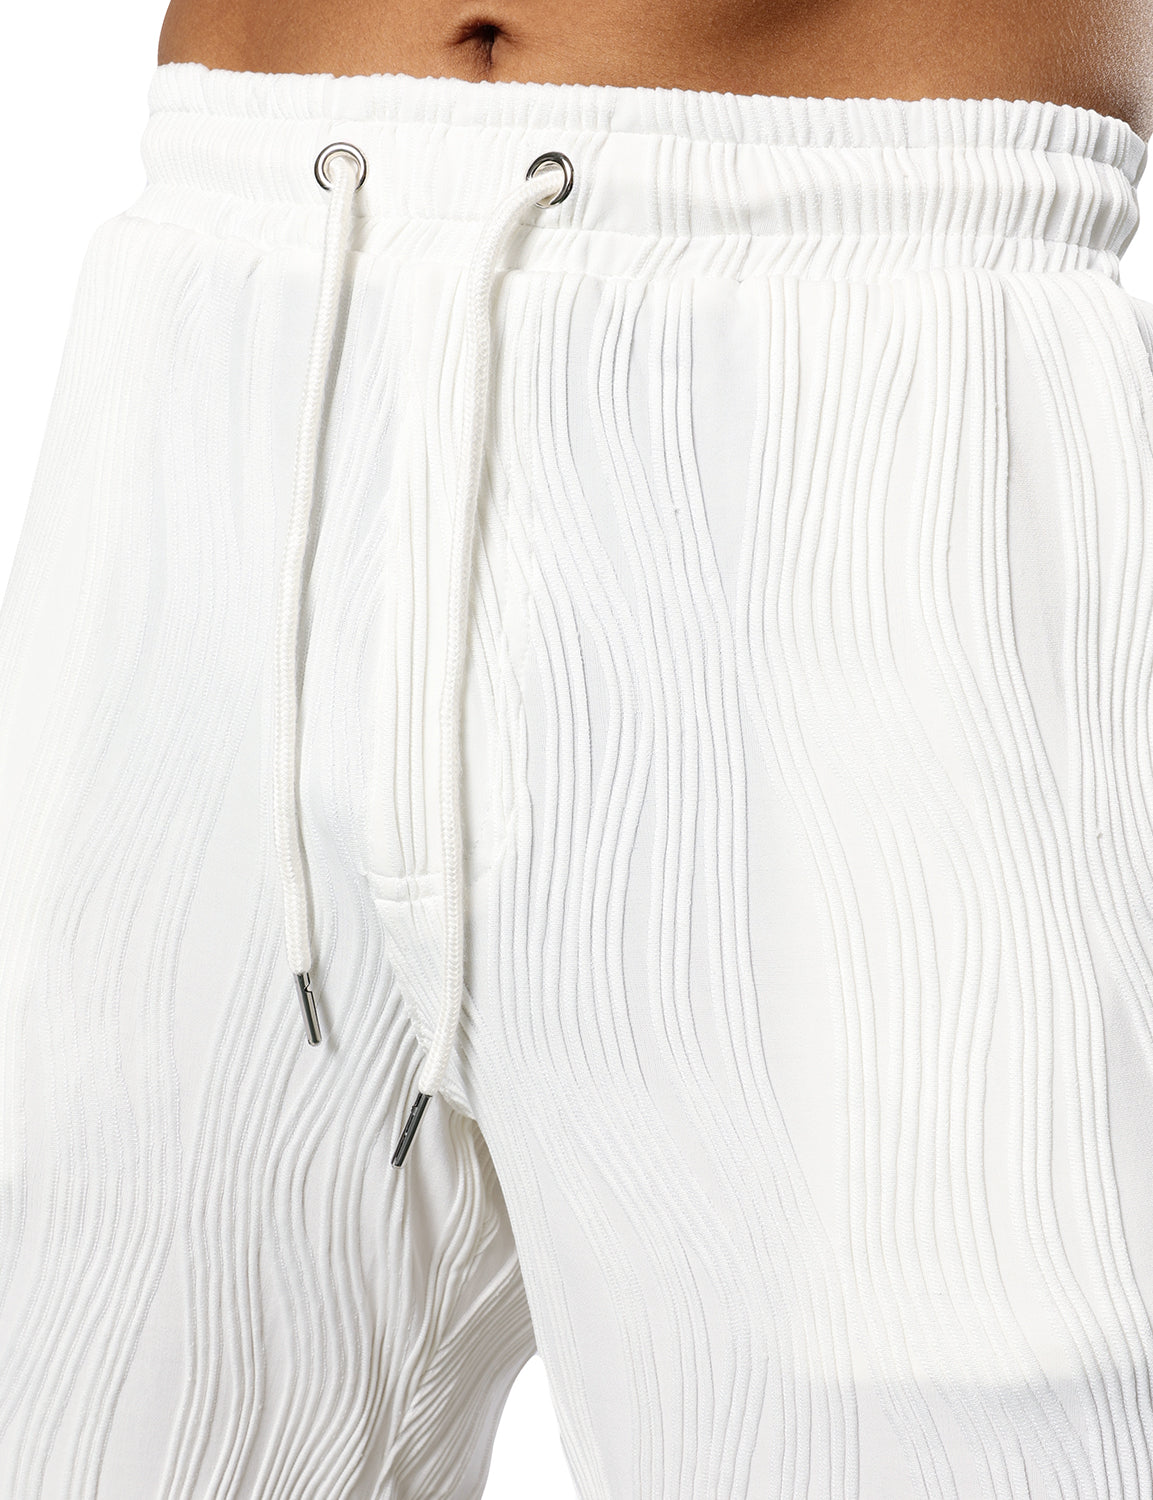 JOGAL Mens 2 Pieces Short Sets Short Sleeve Casual Button Down Shirts Summer Beach Outfits